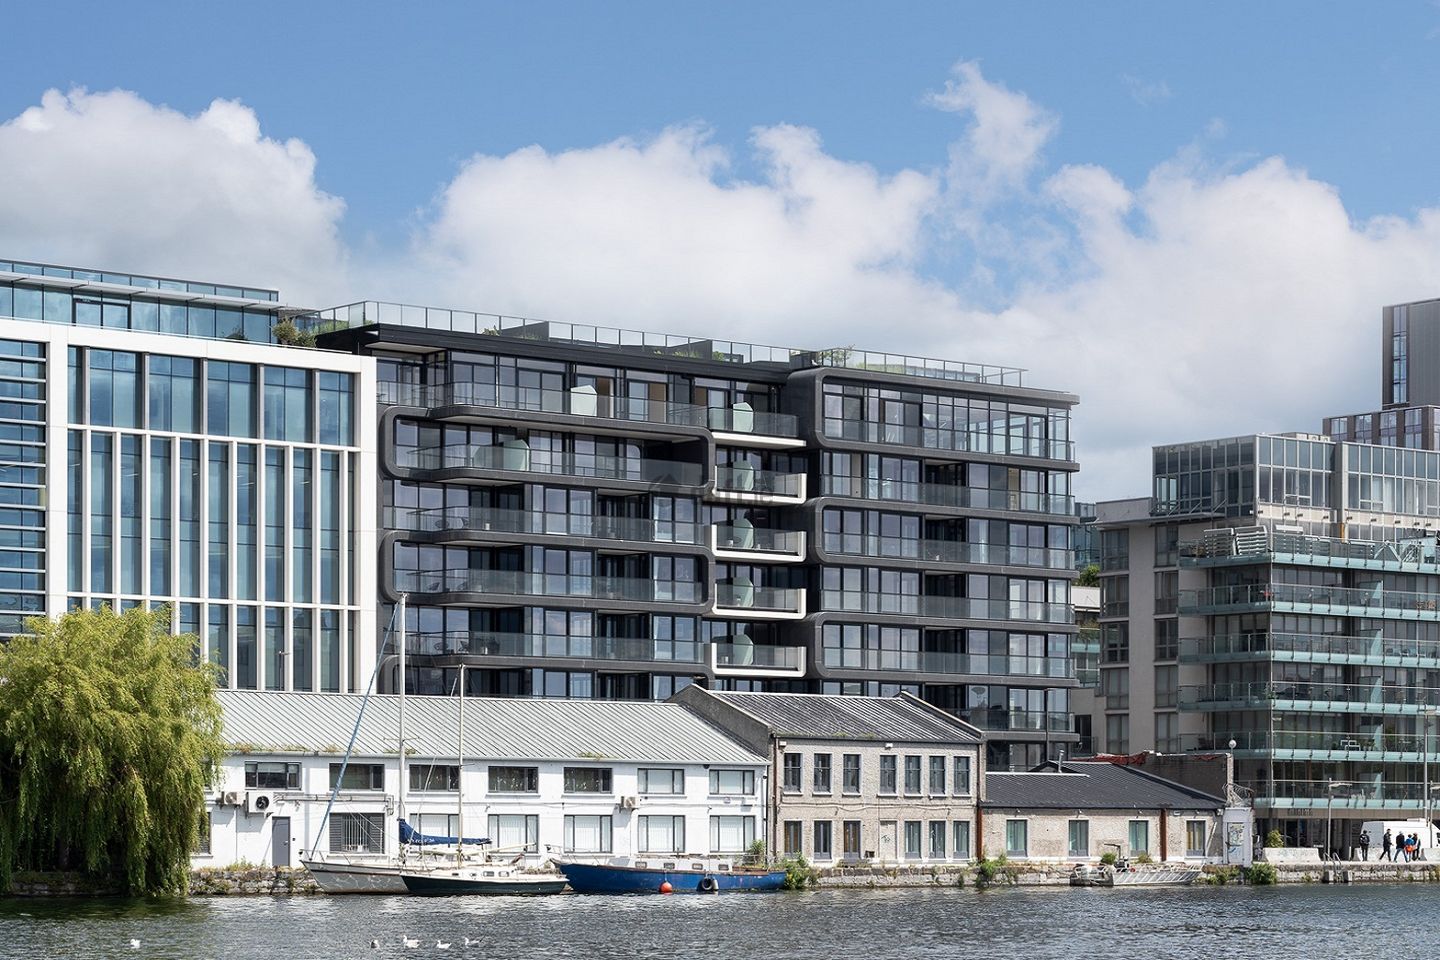 2-Bed Apartment with courtyard views, Opus, 6 Hanover Quay, Hanover Quay, Dublin 2